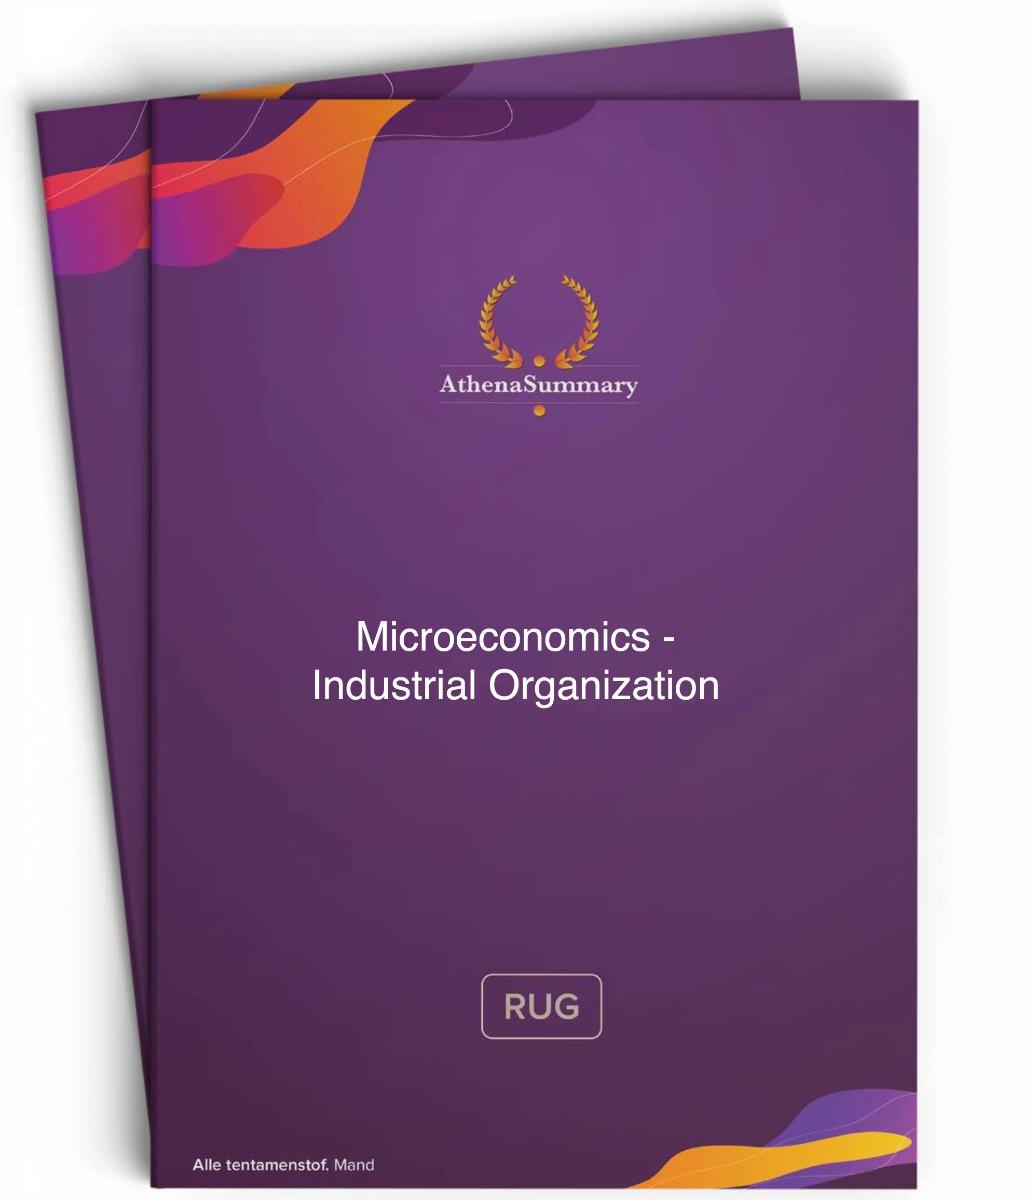 Literature Summary - Microeconomics - Industrial Organization